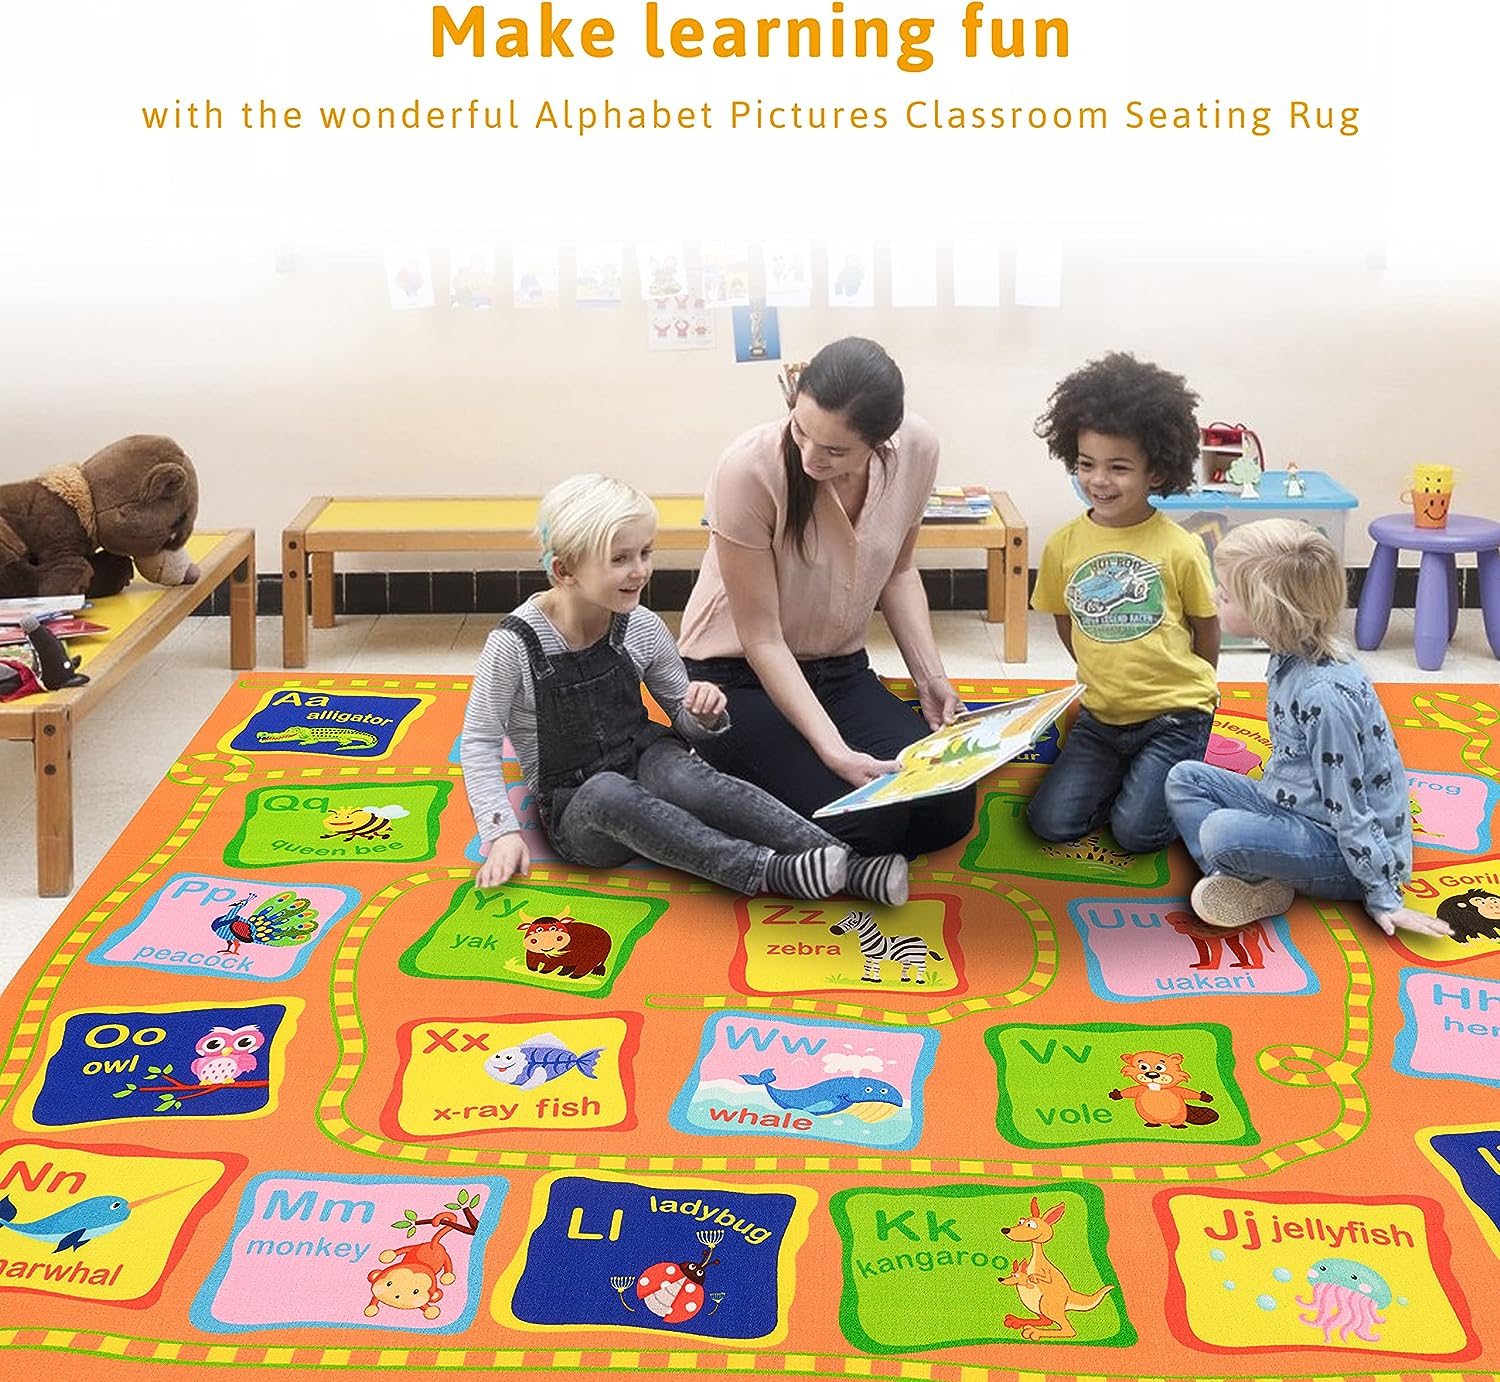 13'x7'5" Elementary Education Classroom Carpet ABC Rug For Preschool